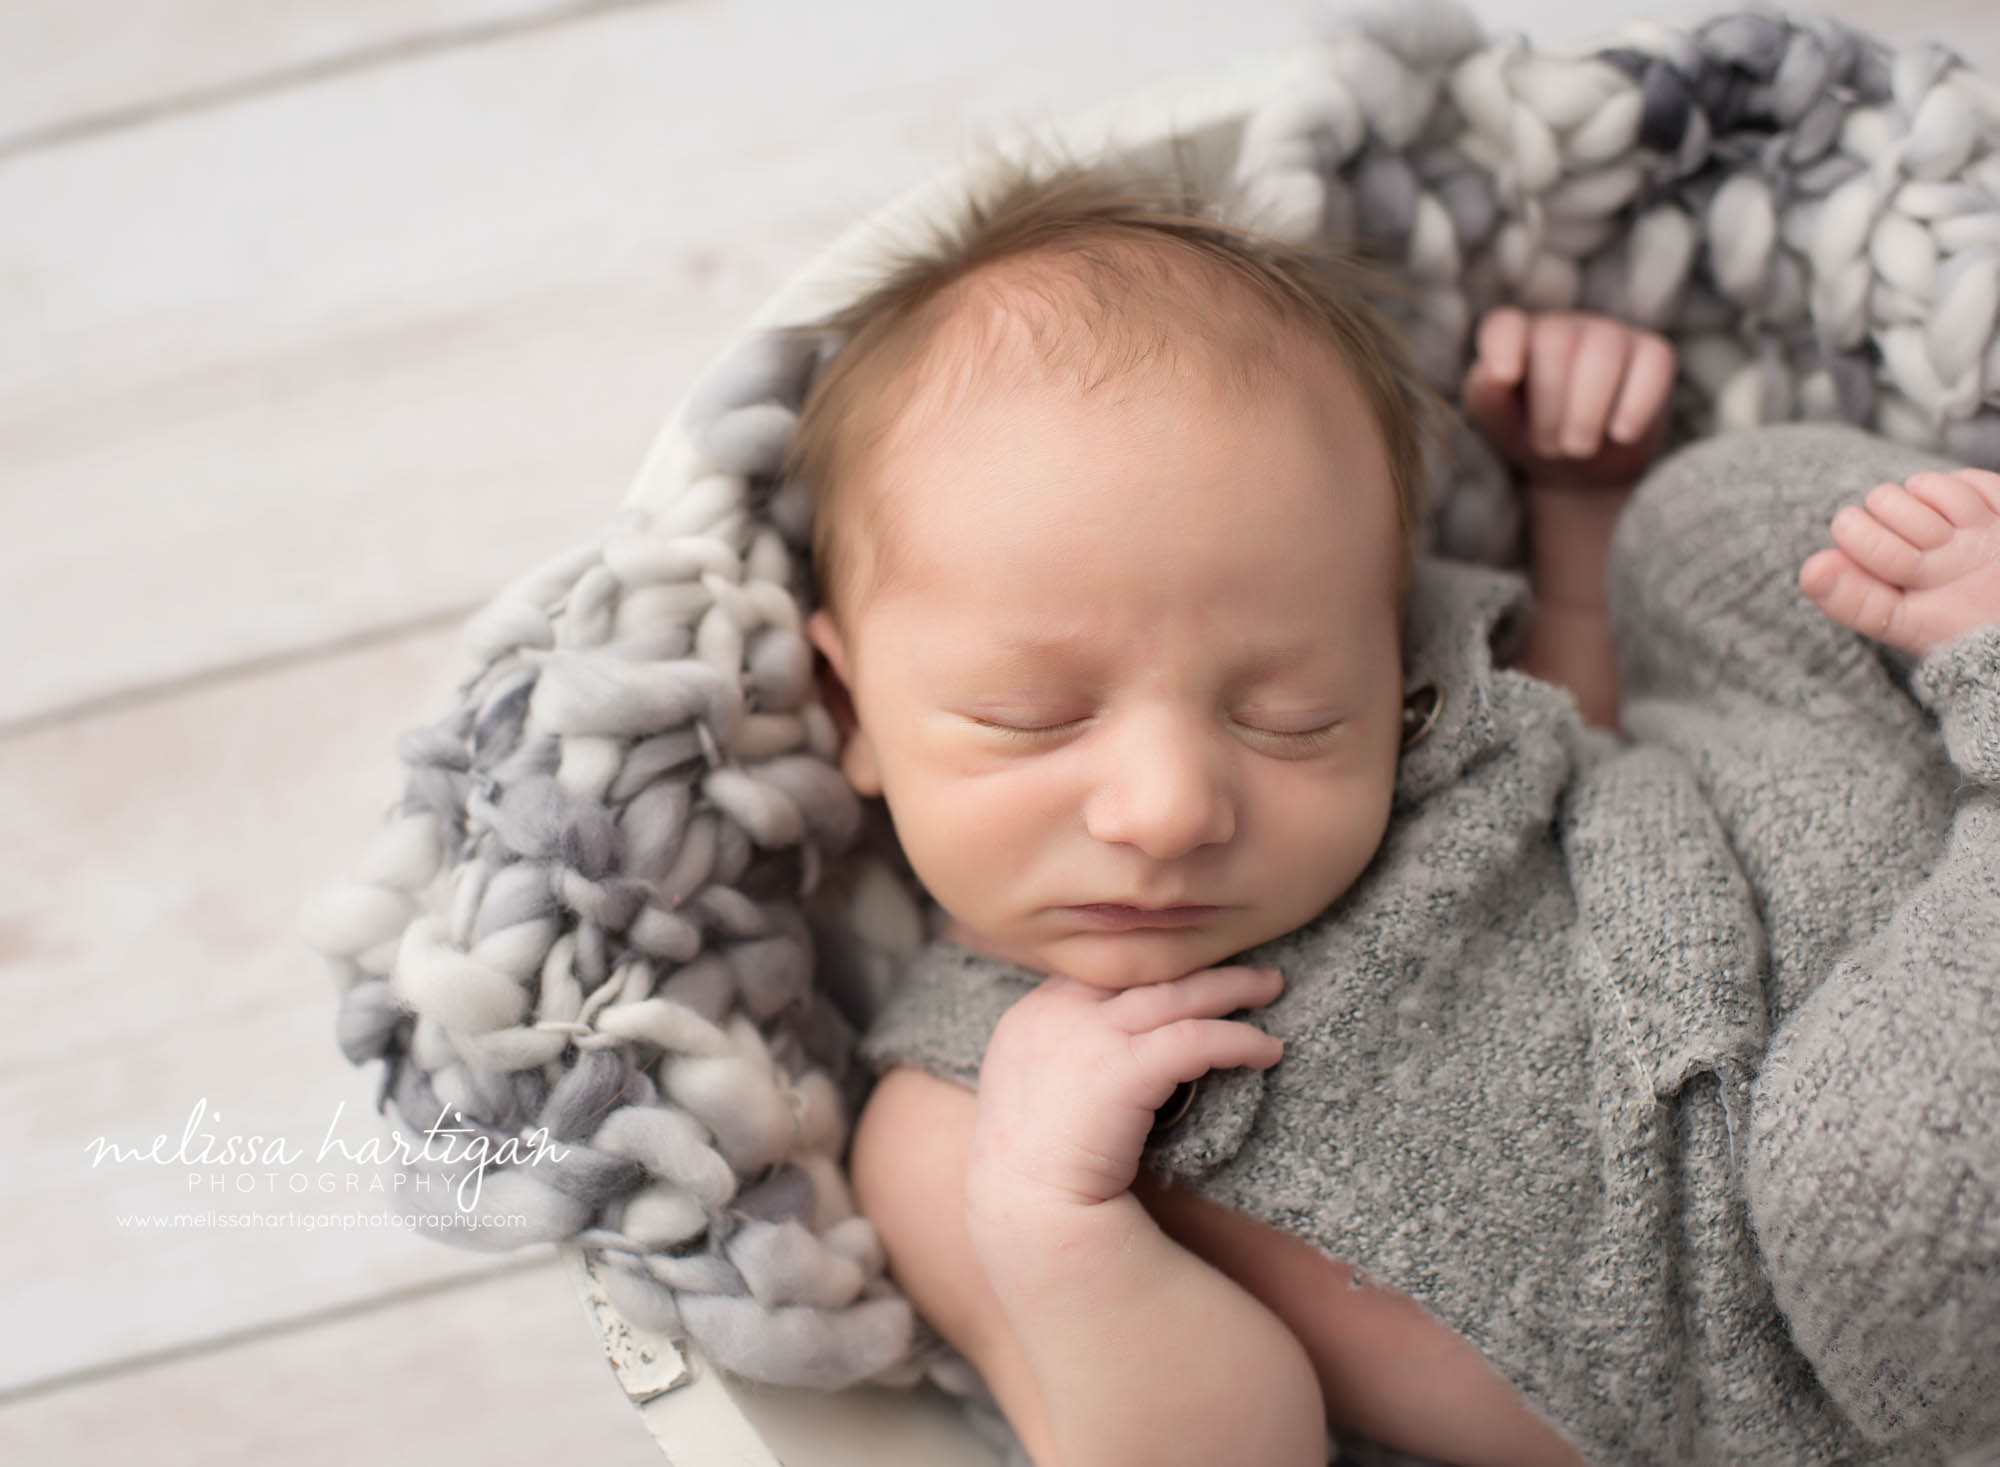 Newborn Photographer Connecticut newborn pose baby sleeping wearing gray knit overalls